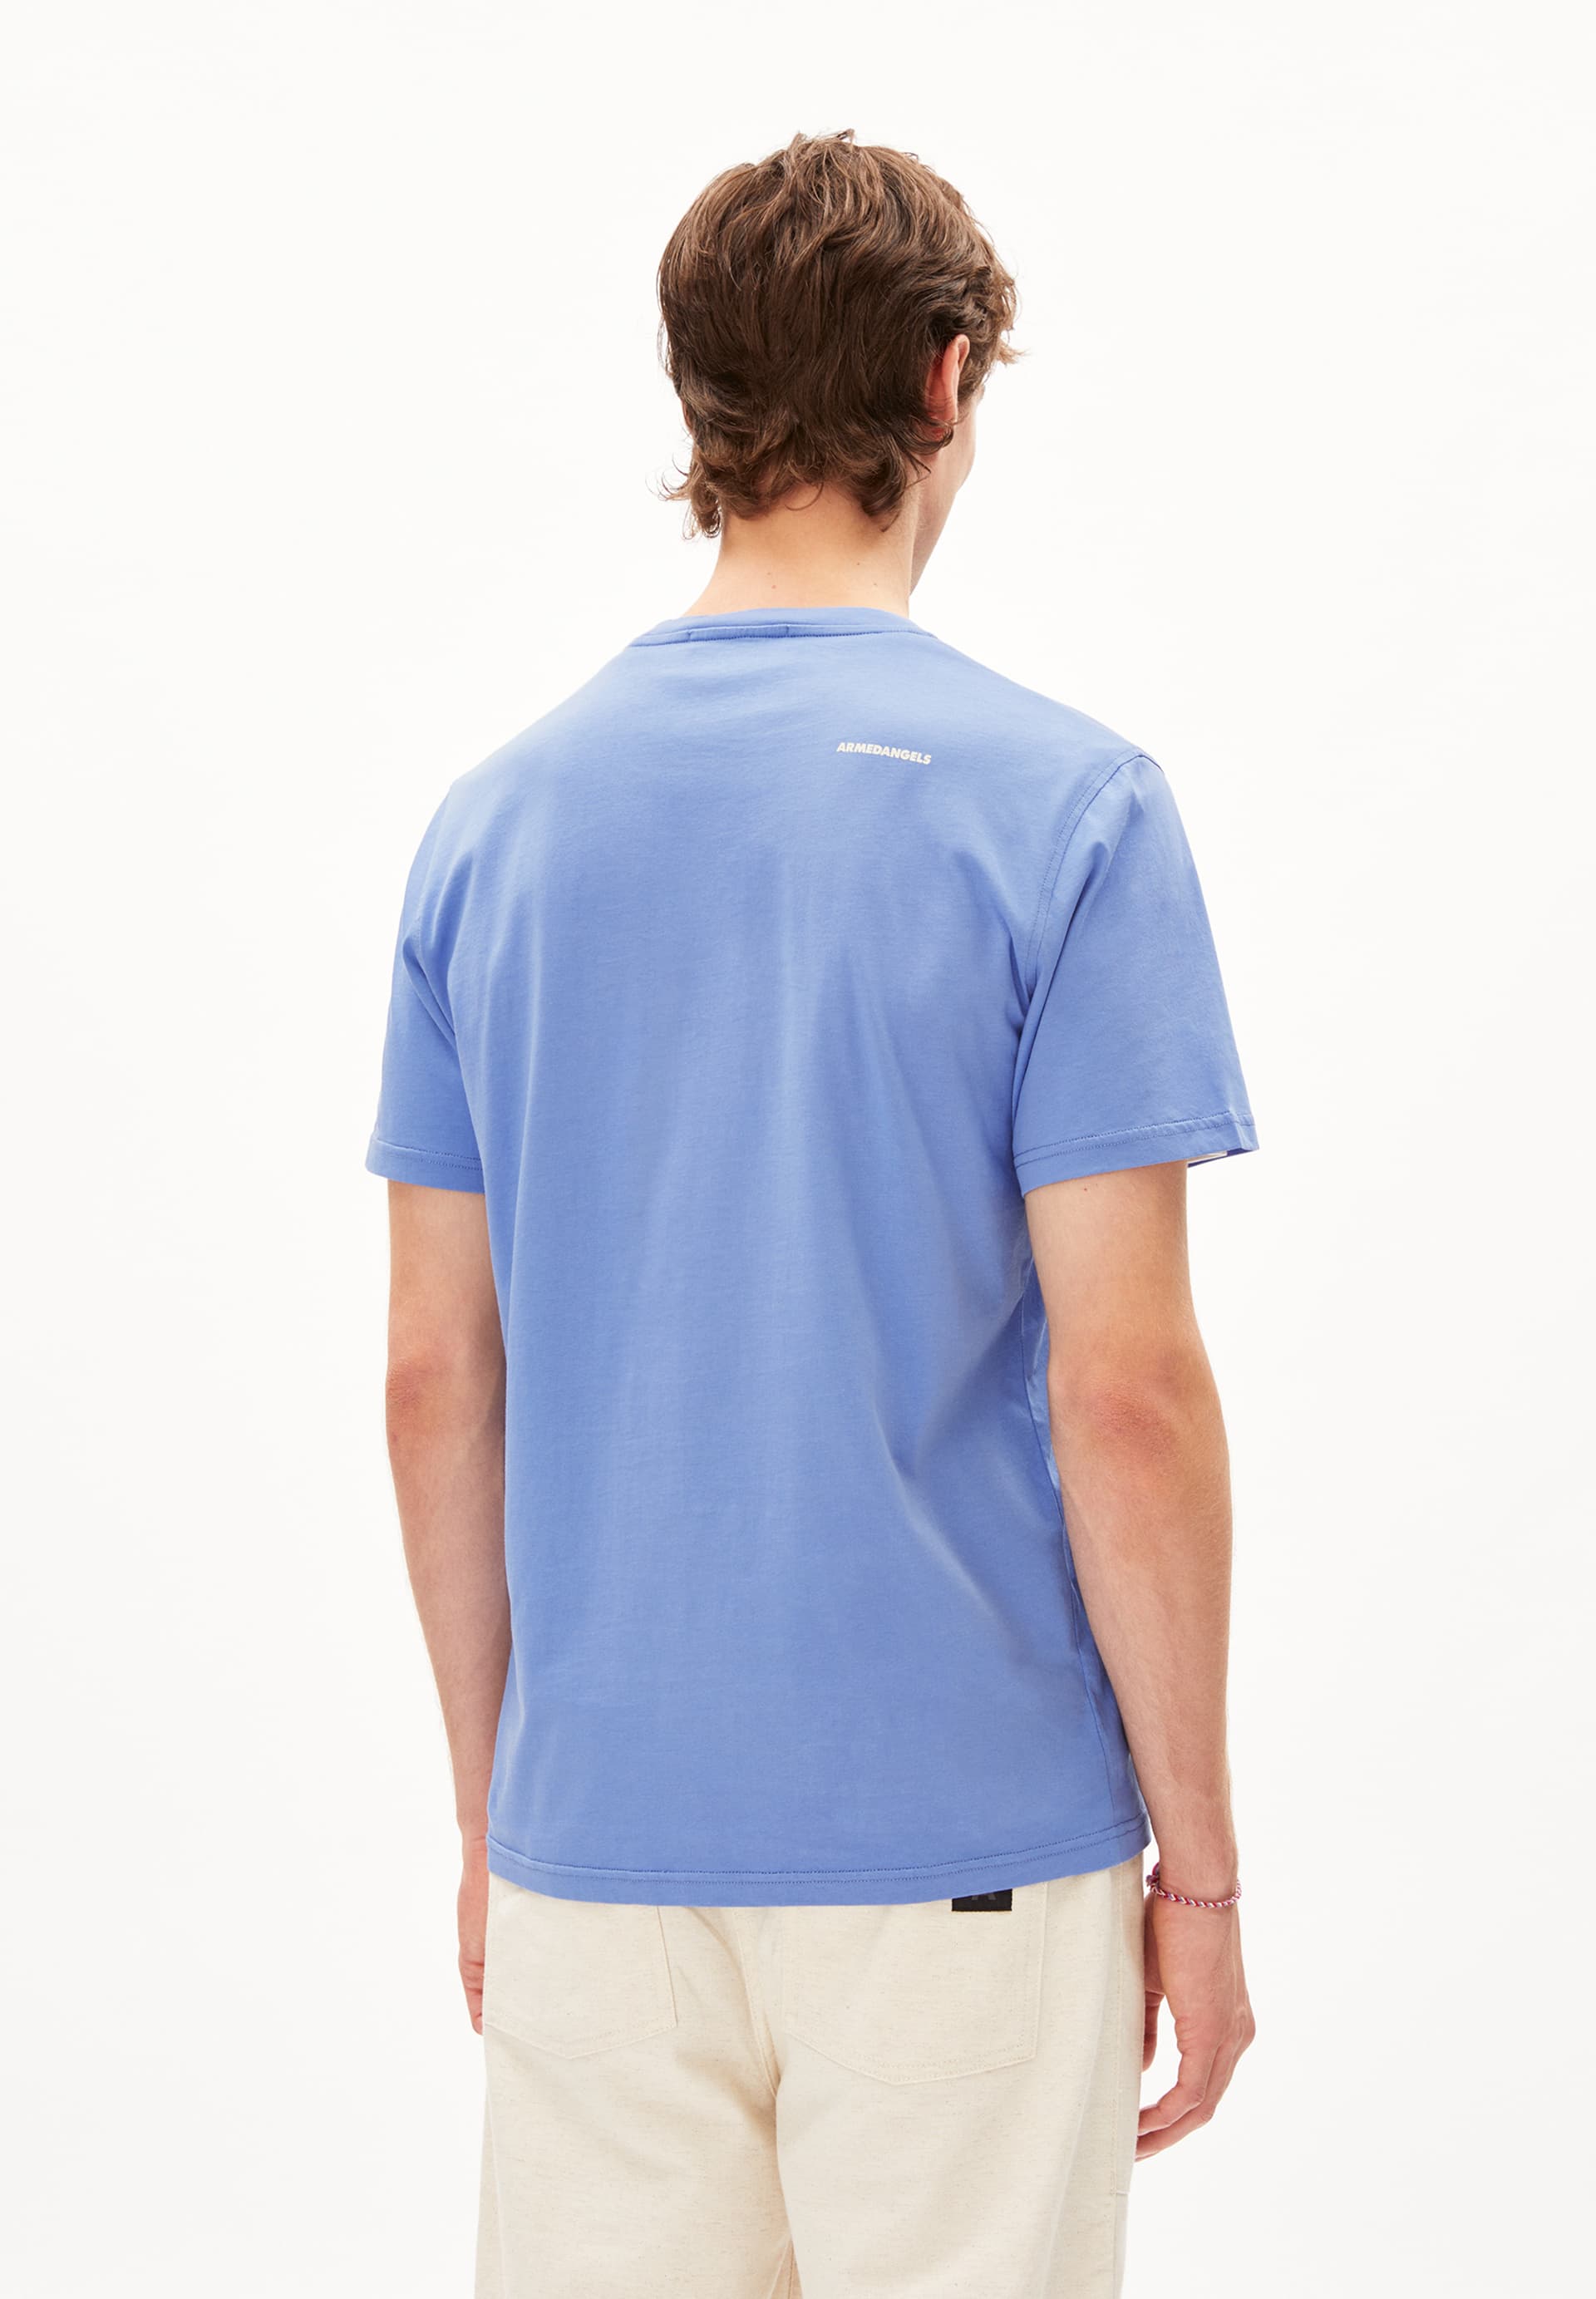 AADONI RAABIT CLOUD T-Shirt Relaxed Fit aus Bio-Baumwolle